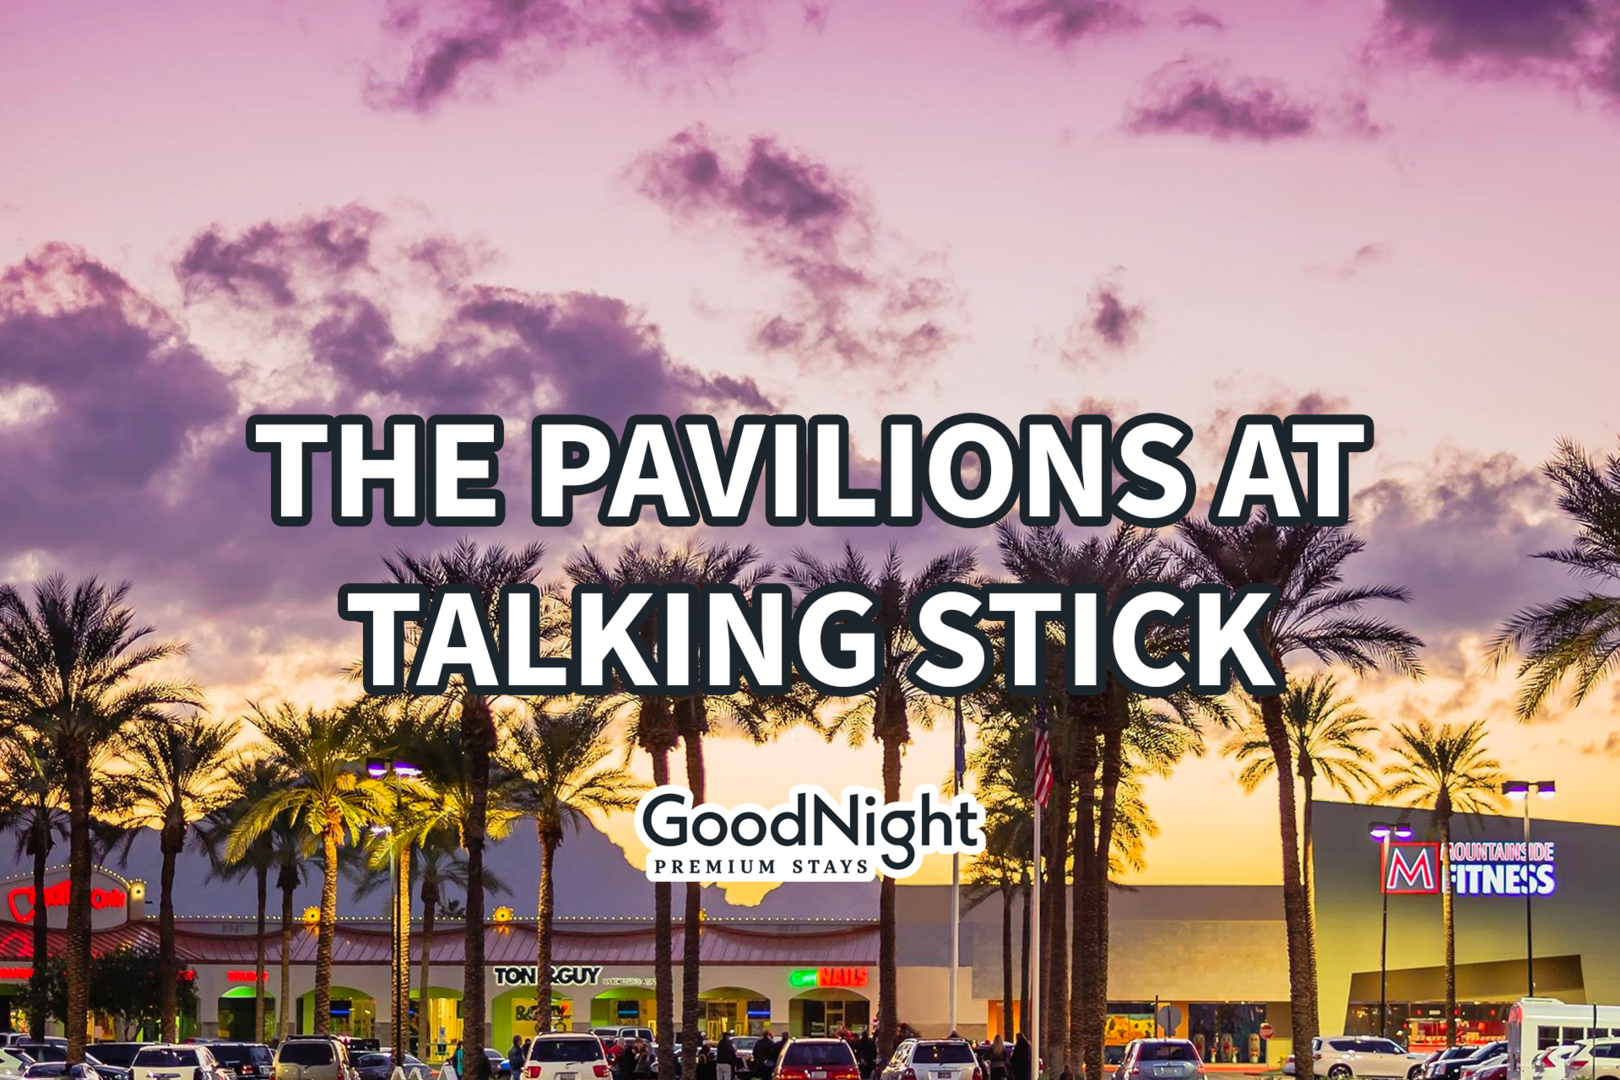 7 mins: The Pavilions at Talking Stick